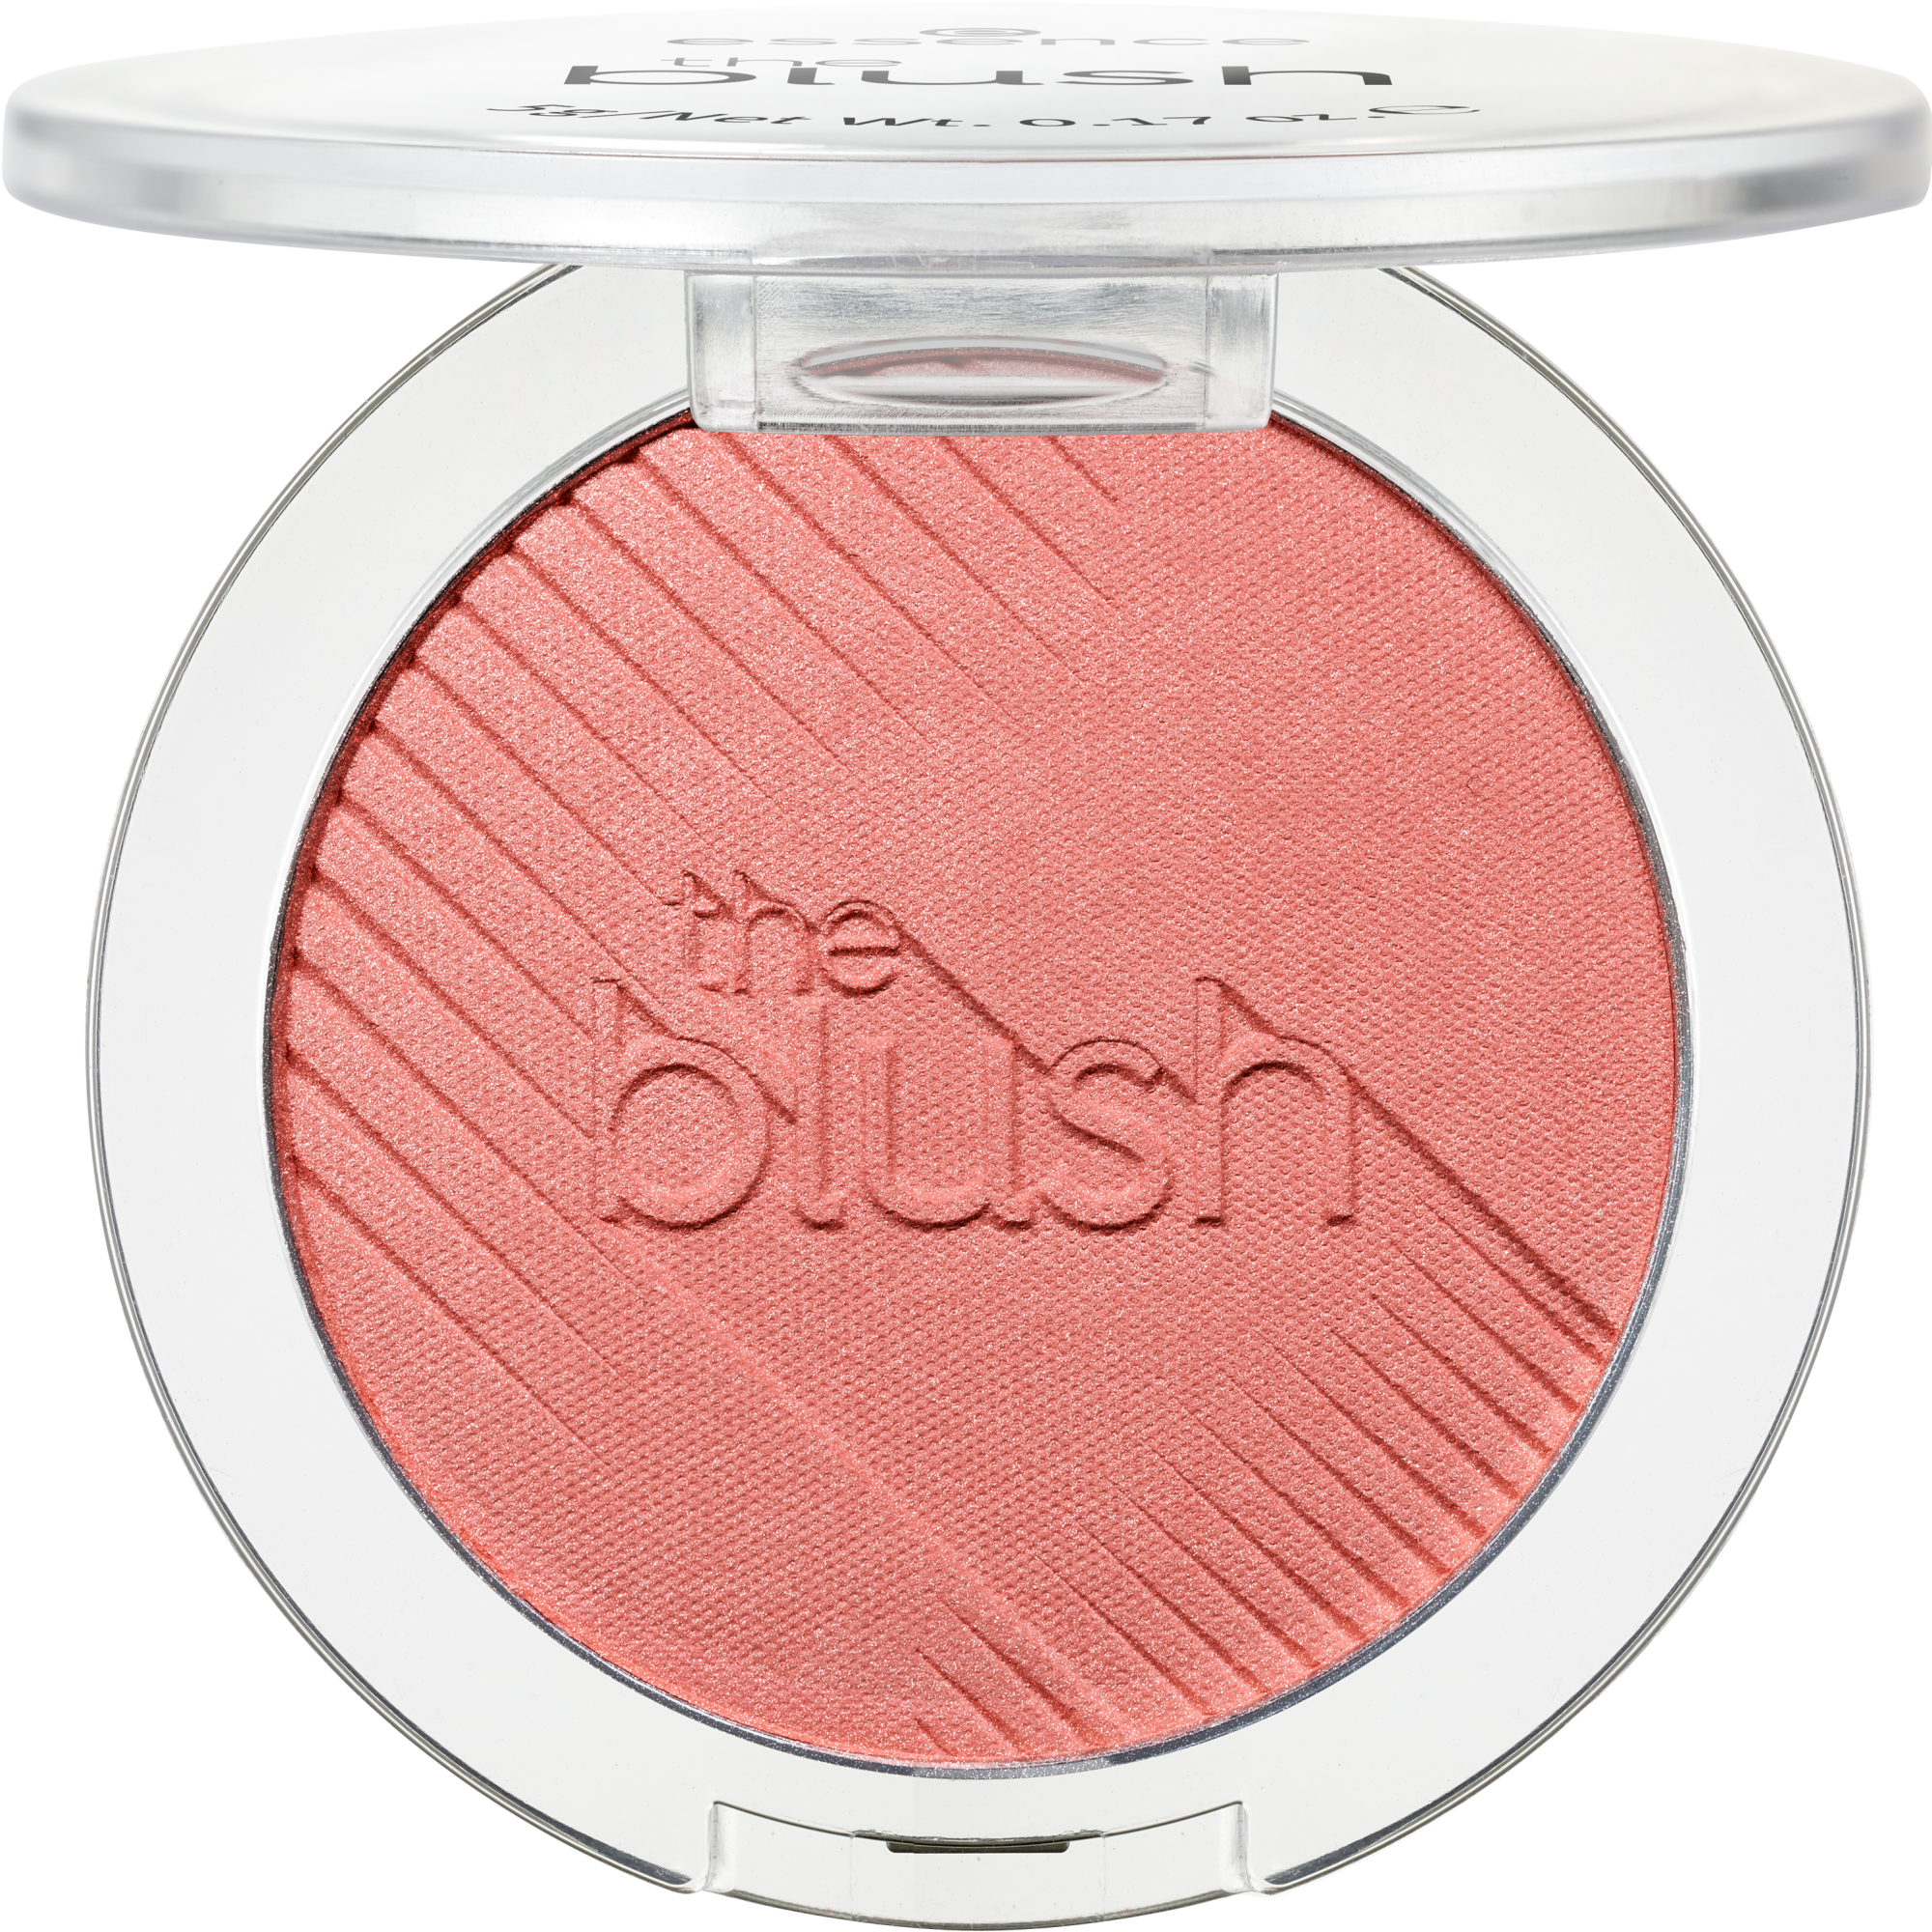 blush the blush